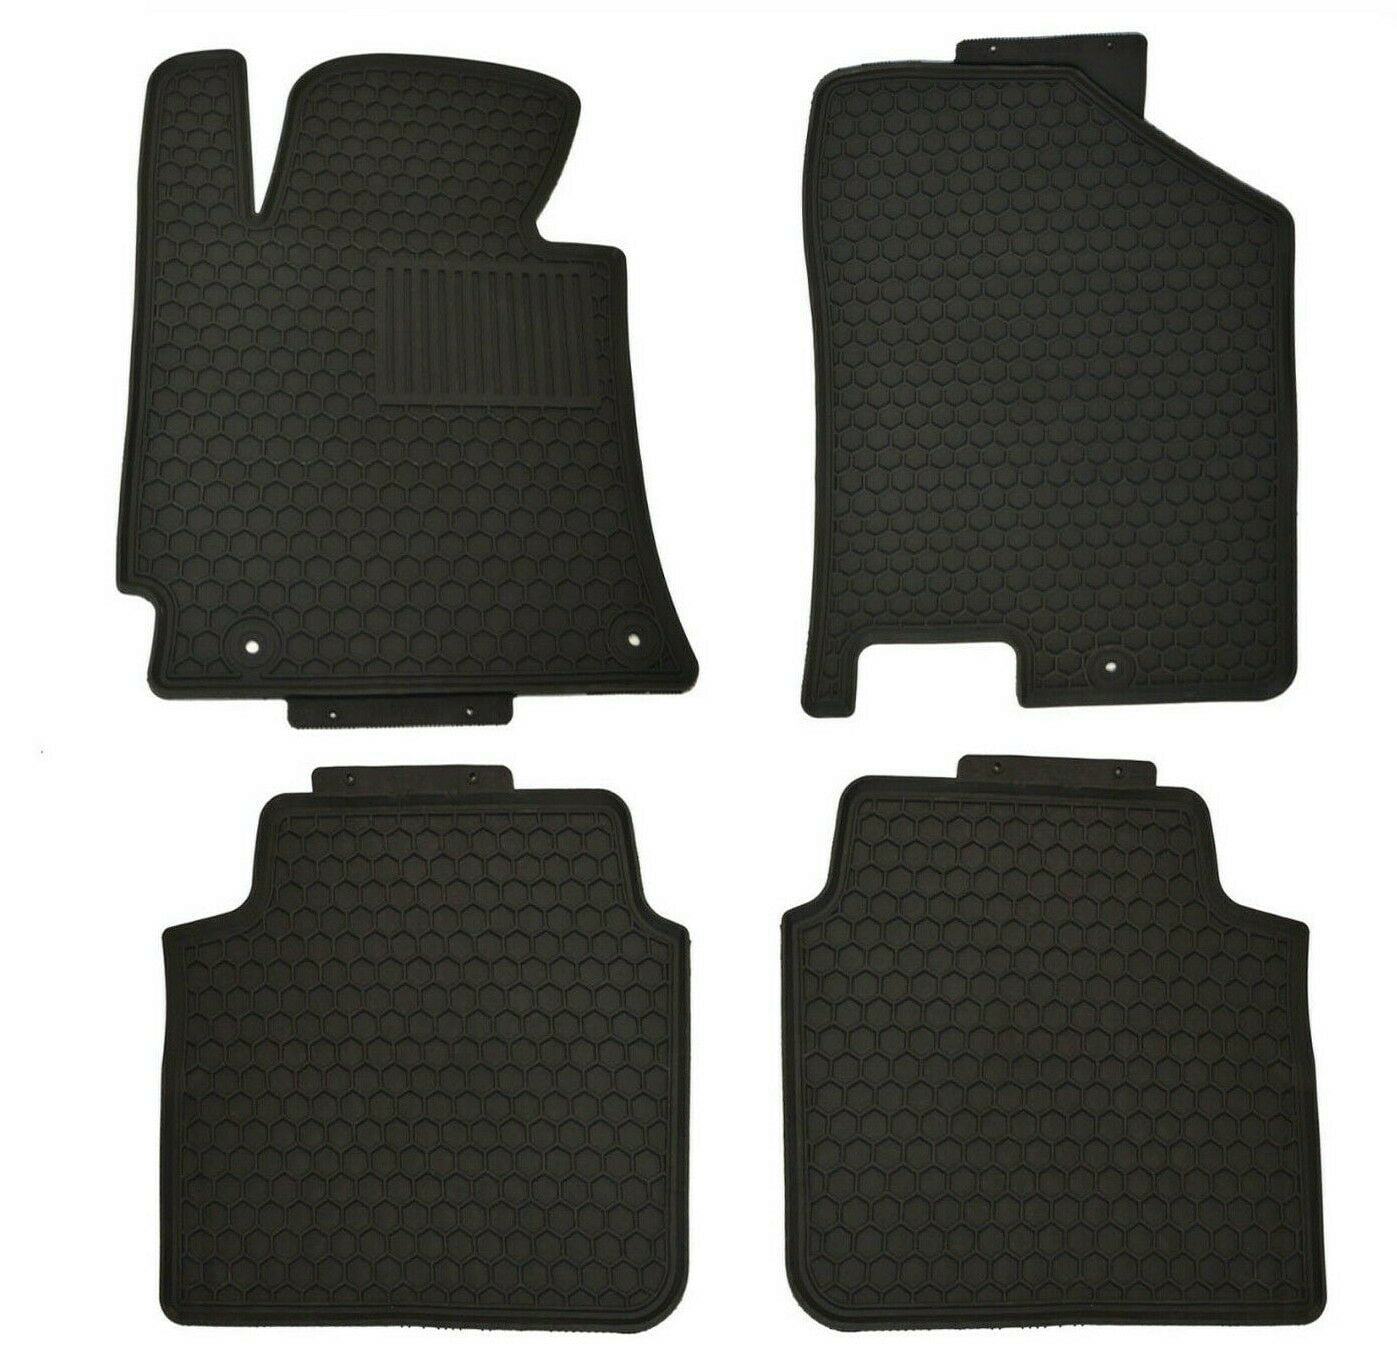 Car Mats For Hyundai ix35 Tailored Fit Black Rubber Floor Set 4 Pieces Anti-Slip Heavy-Duty & Waterproof